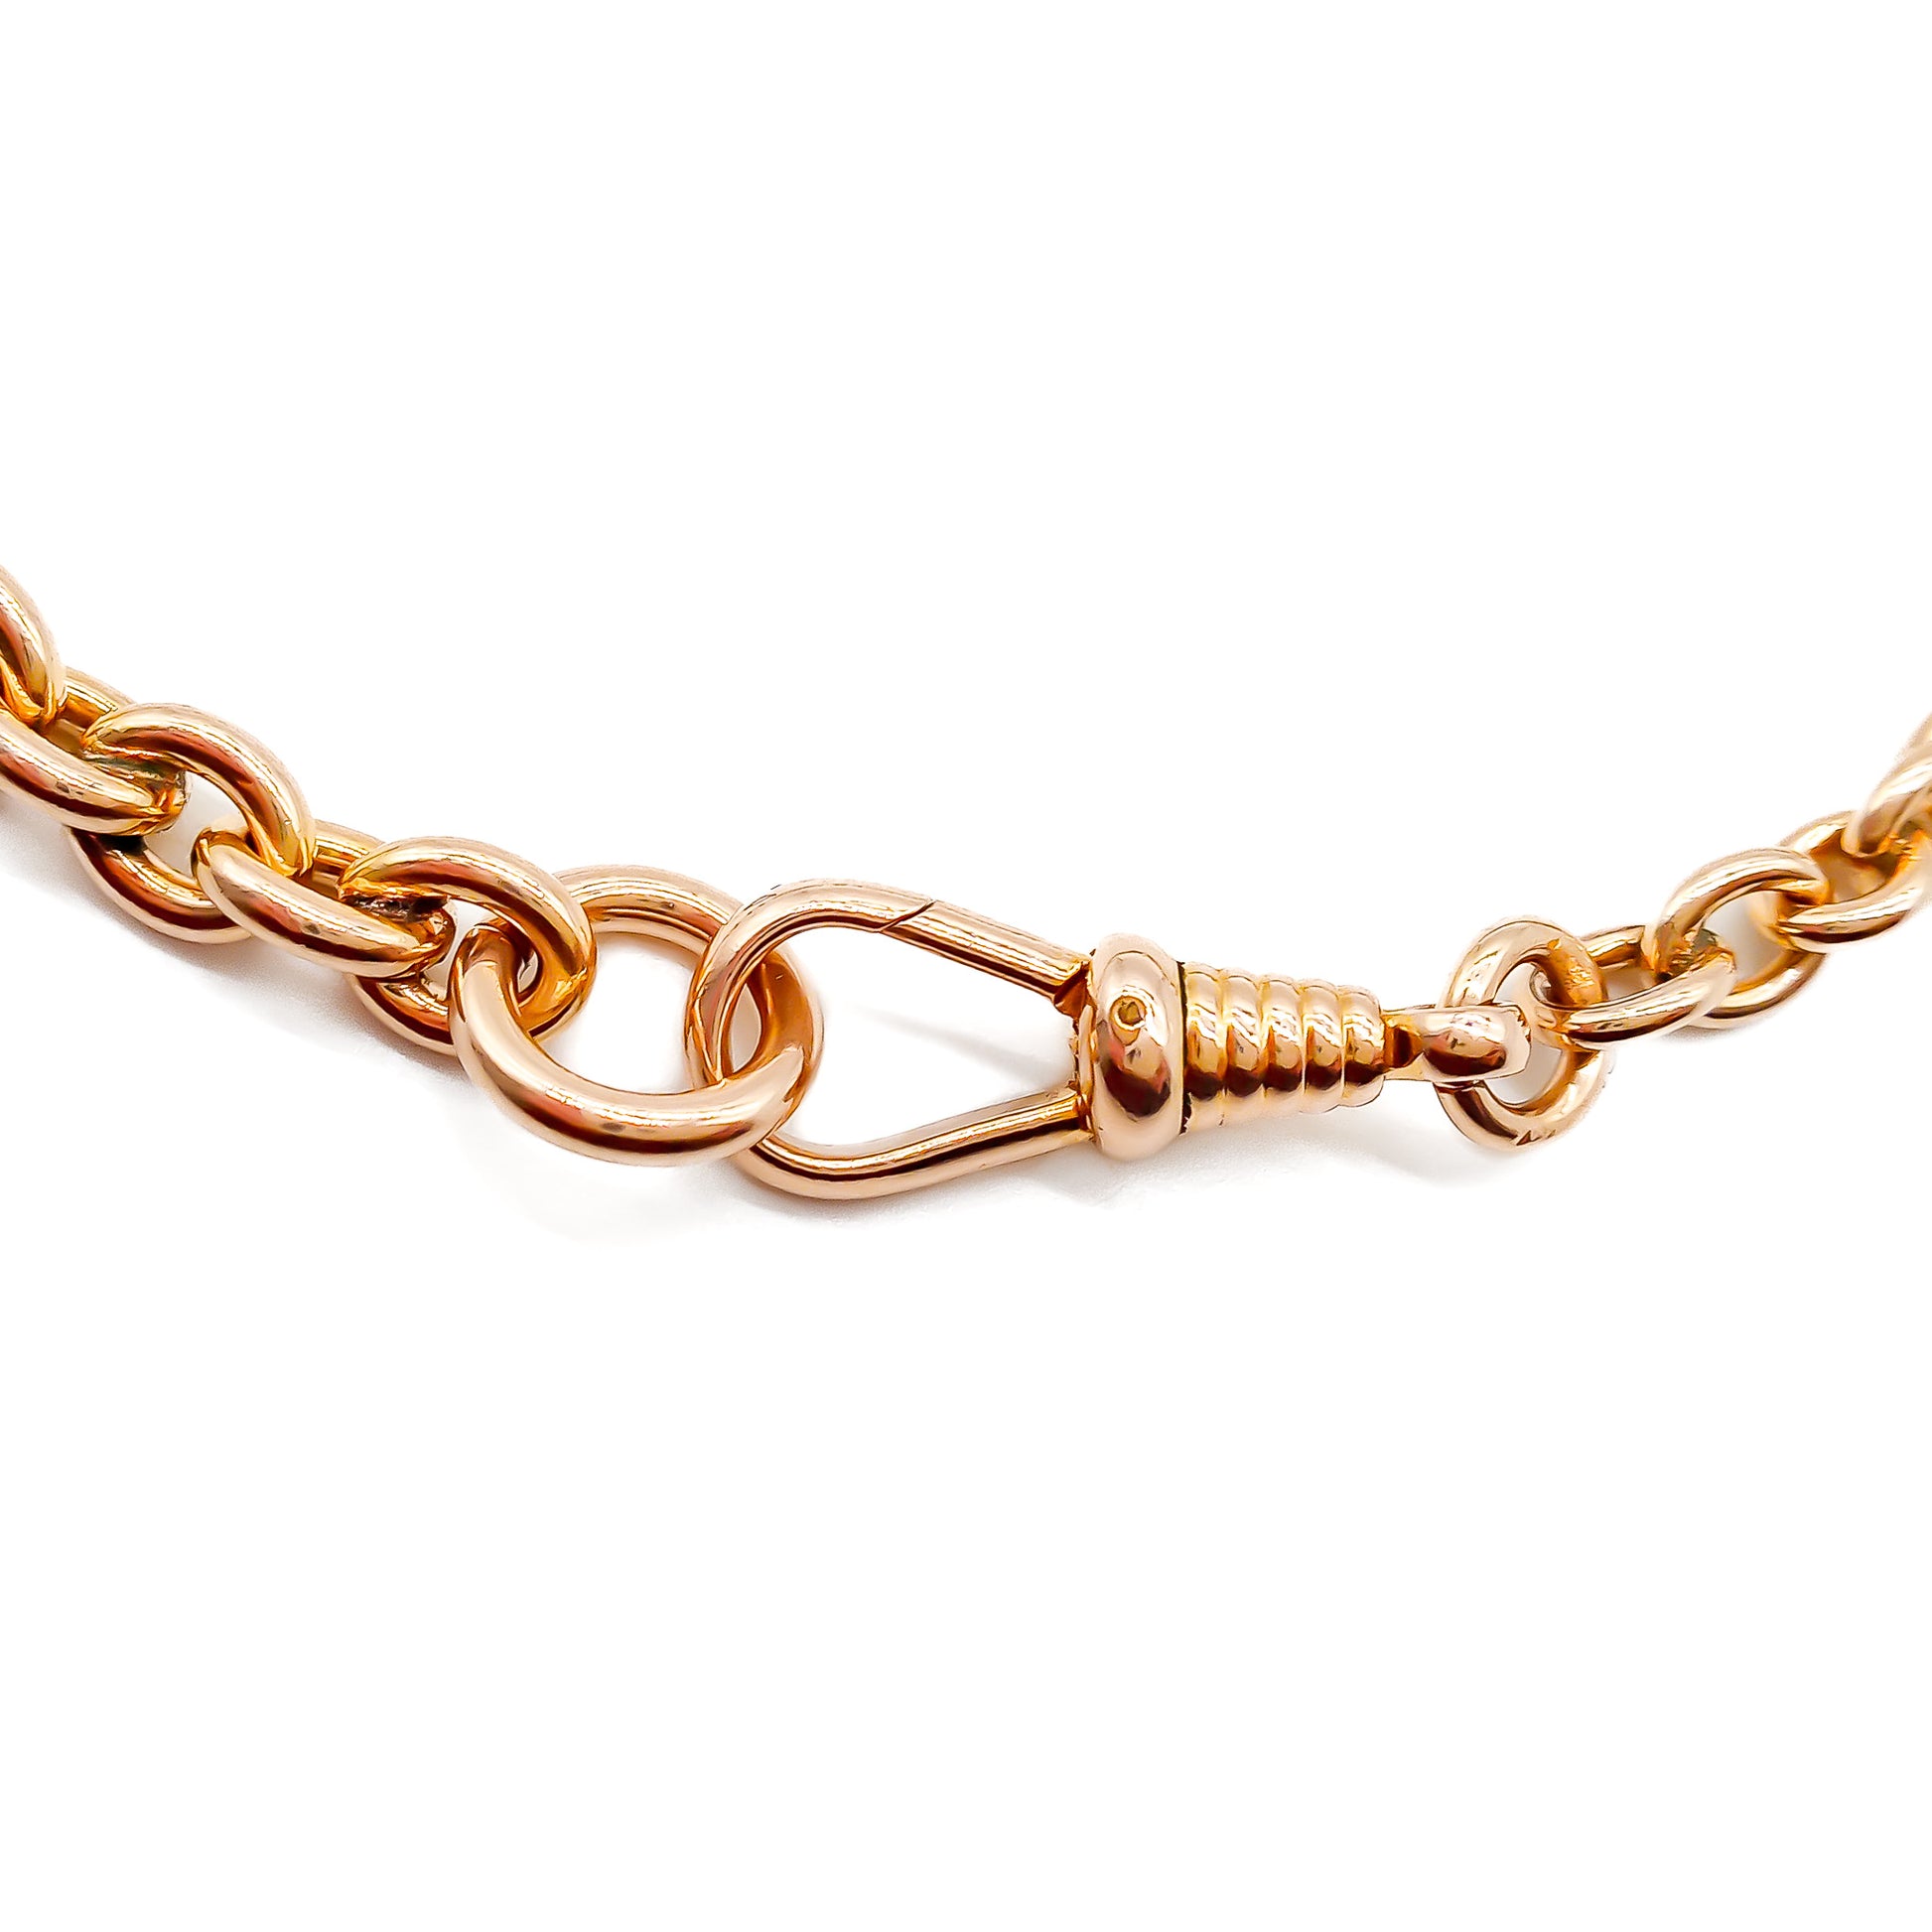 Classic 10ct rose gold graduated belcher link bracelet. American